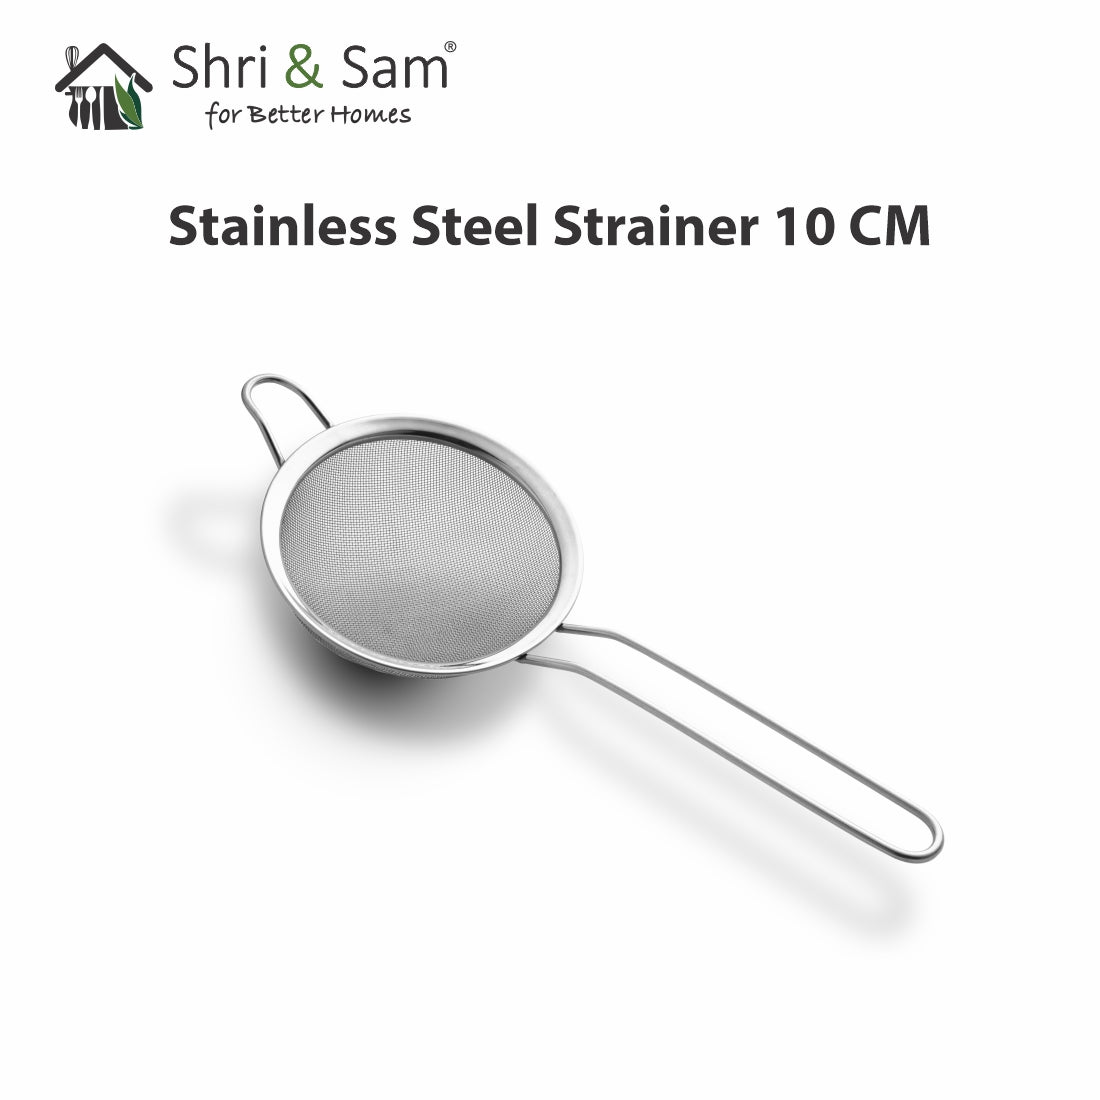 Stainless Steel Strainer 10 CM